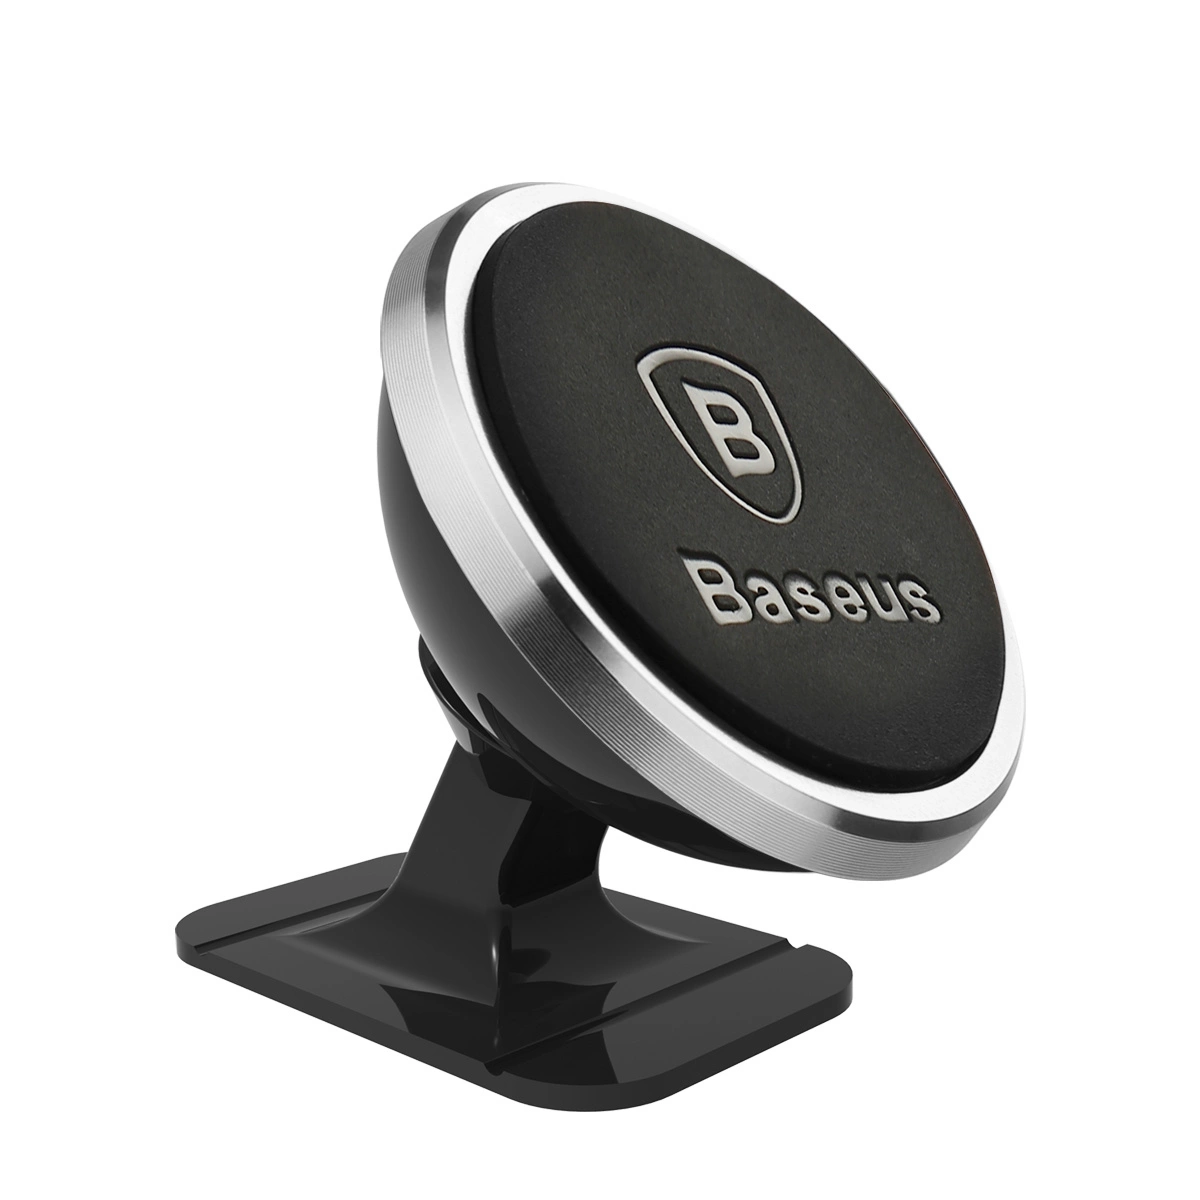 Baseus 360º (Overseas Edition) magnetický držák do kokpitu auta - stříbrný